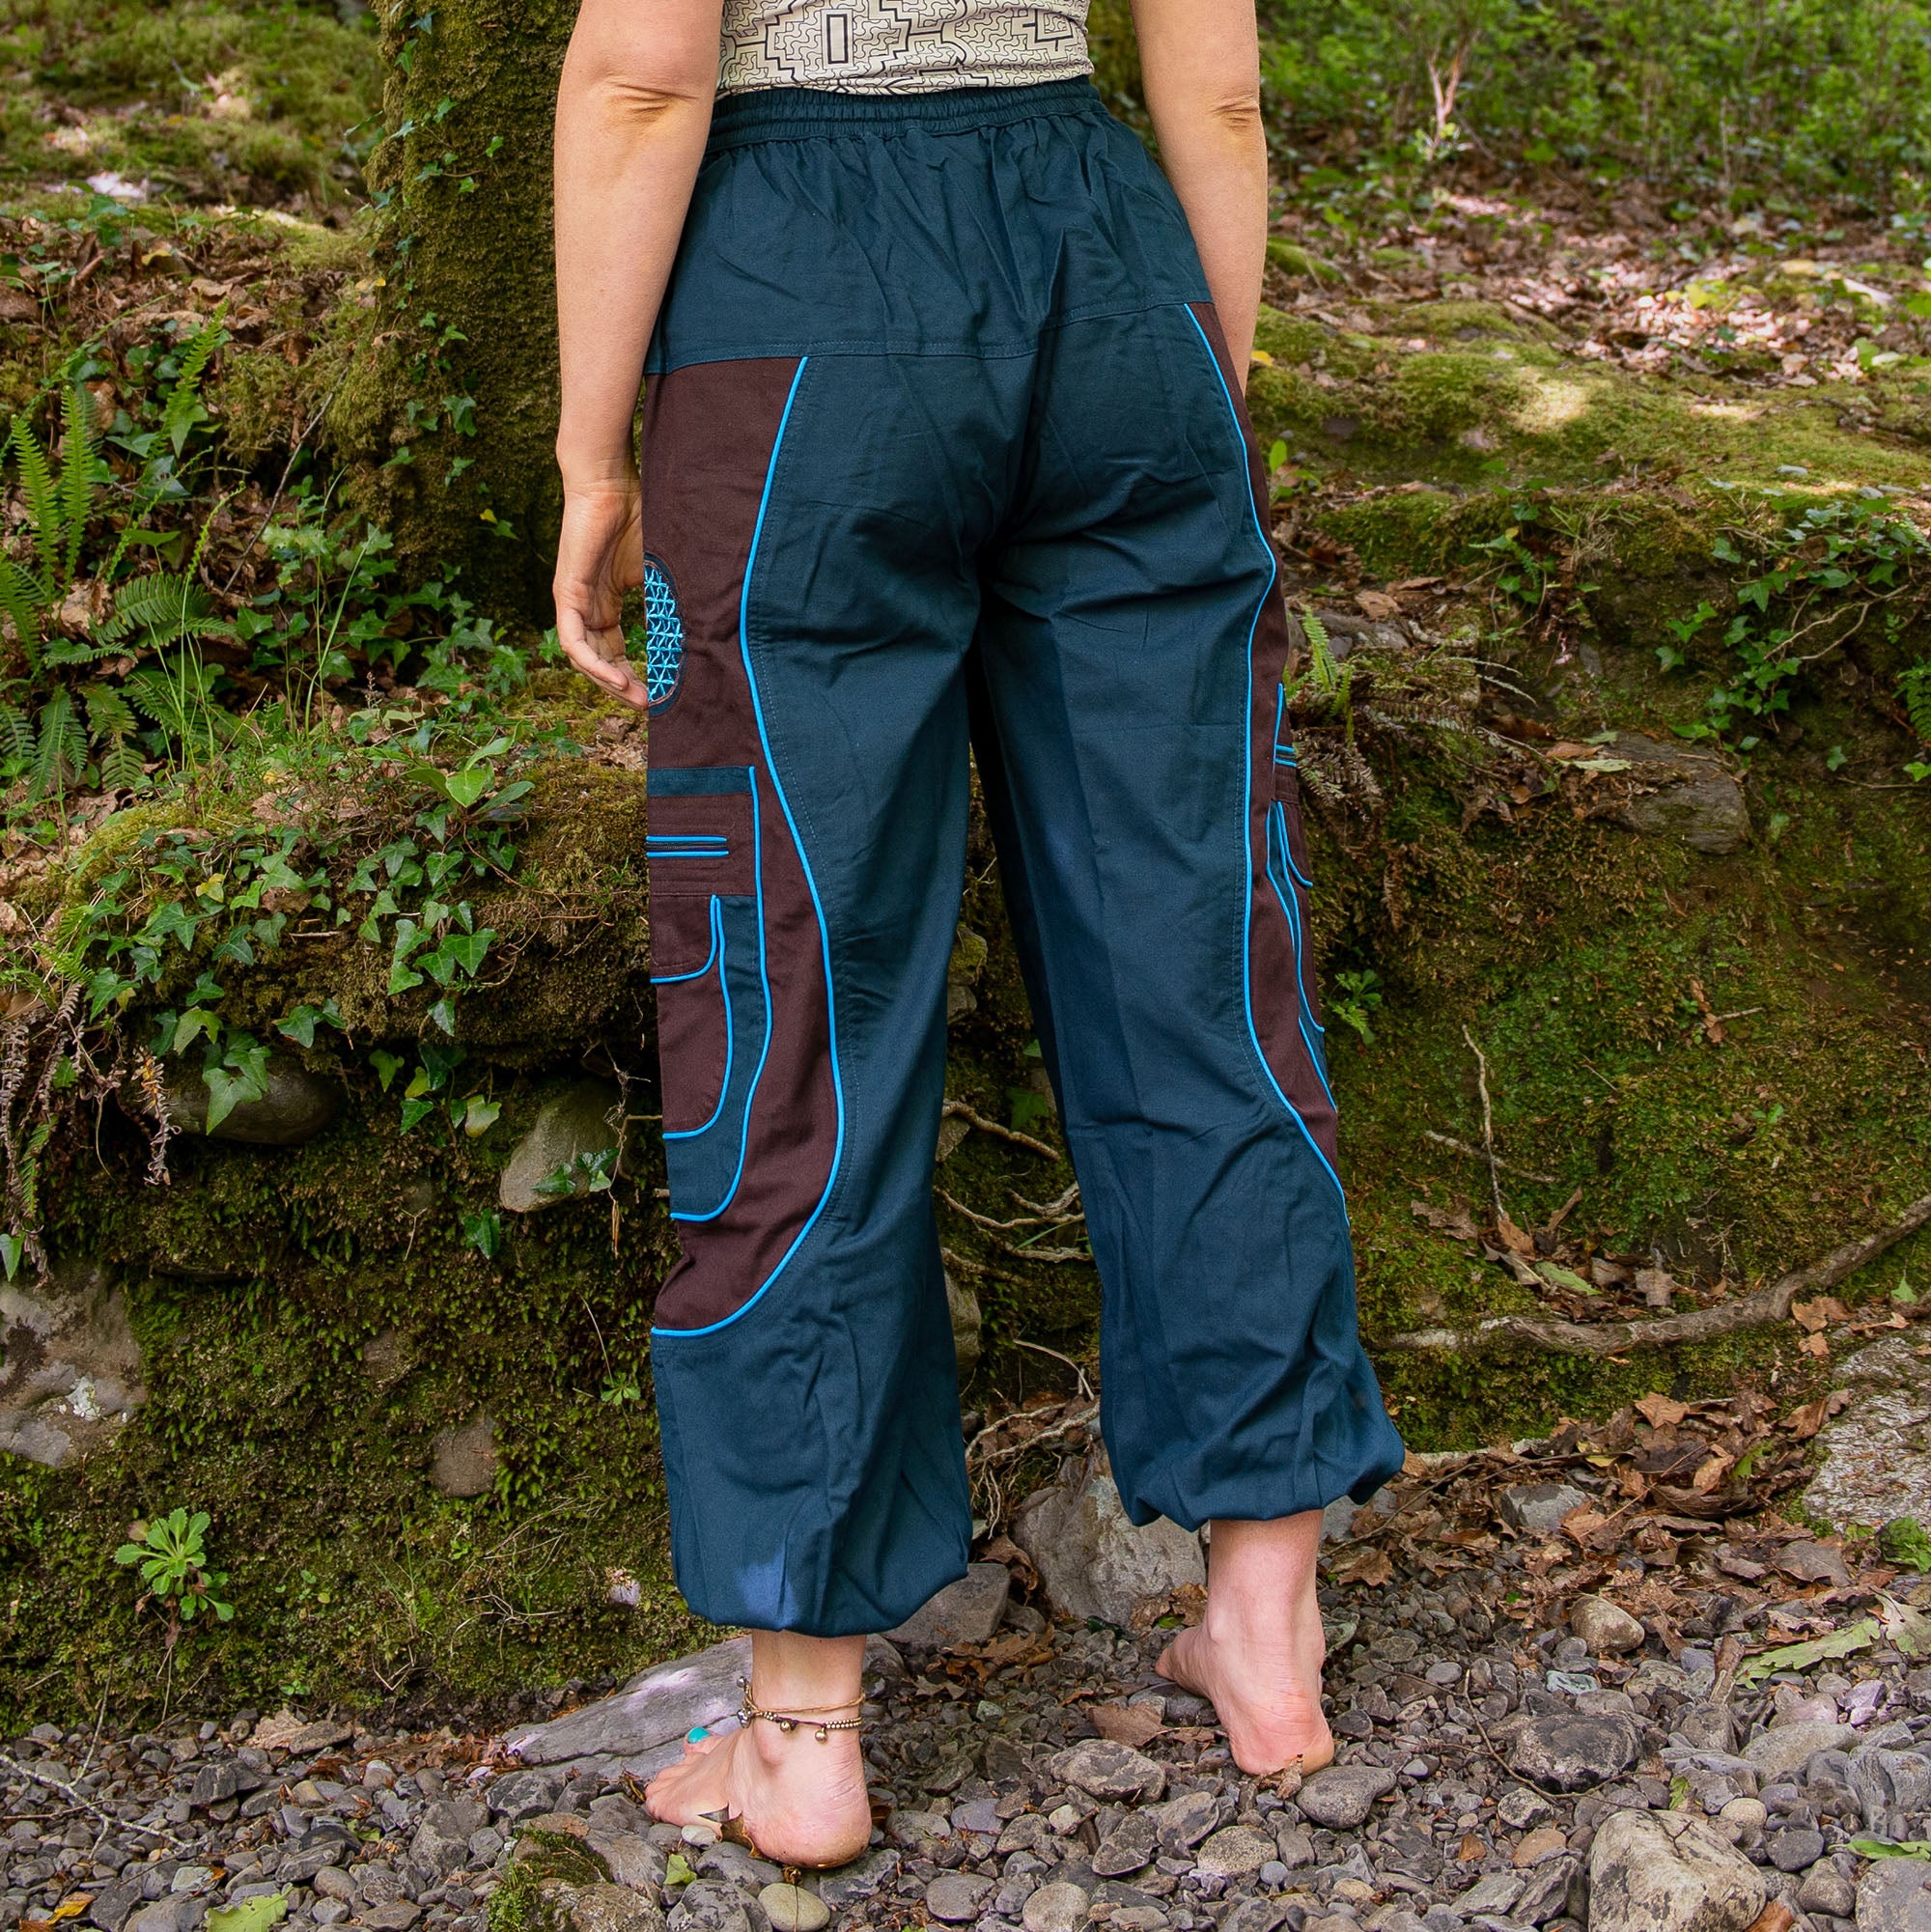 Flower of Life Hippie Pants, Festival Harem Pants, Yoga Clothing